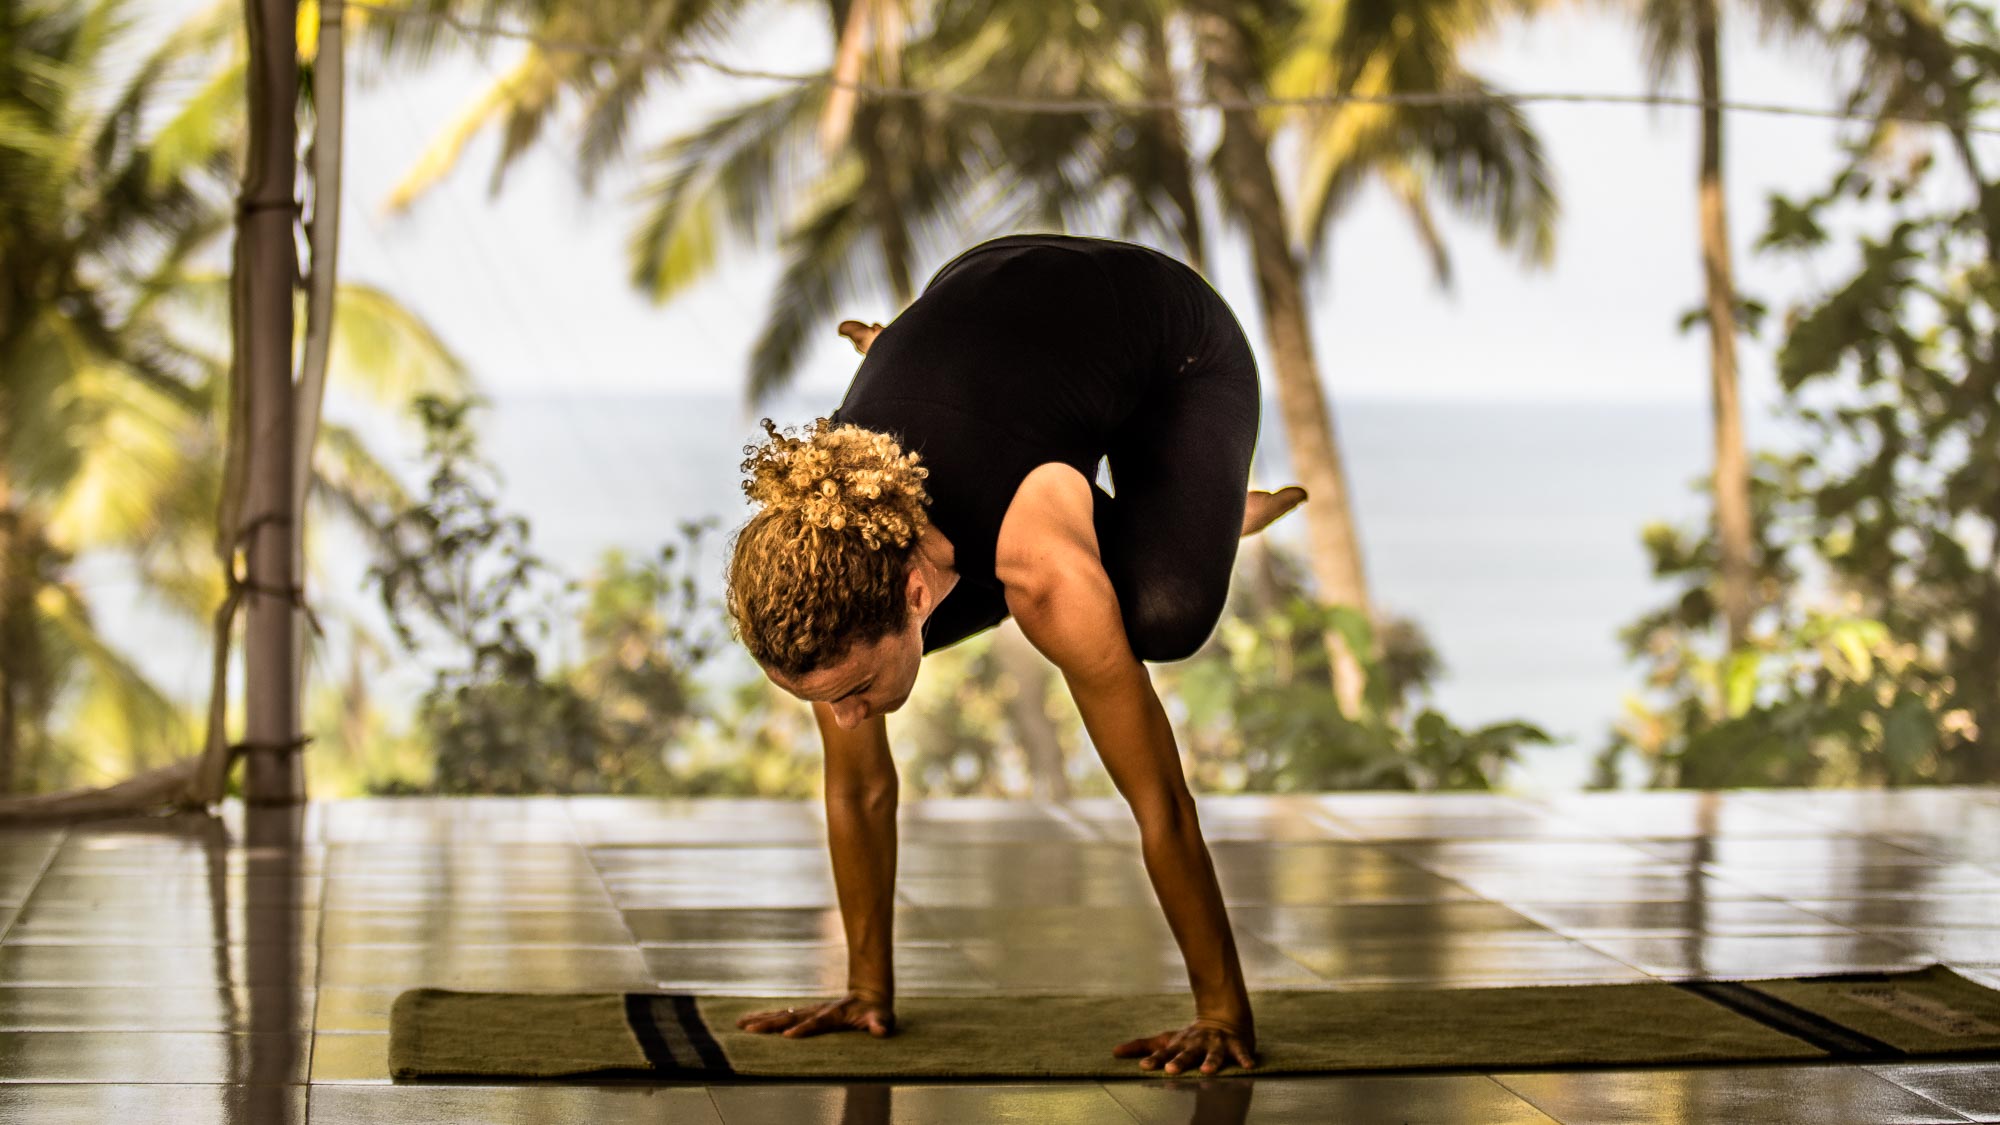 Joanna the co-founder of Alpha Yoga School in arm balance near the beach in India